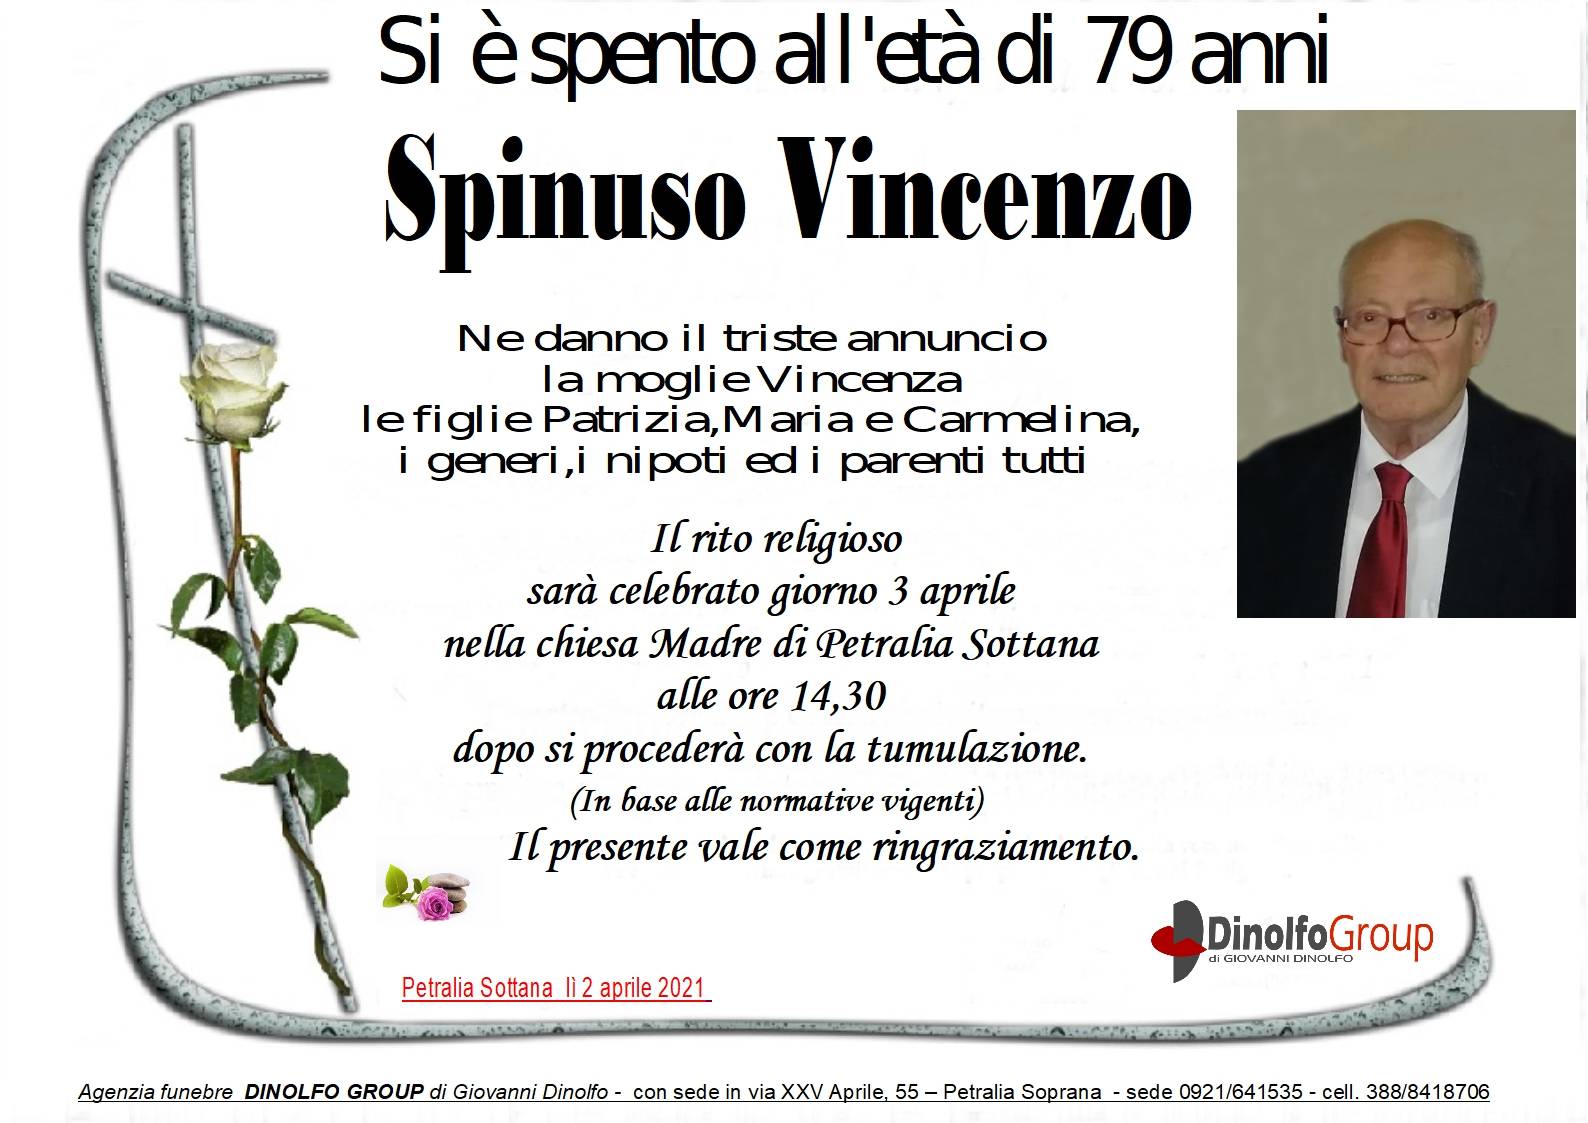 Vincenzo Spinuso